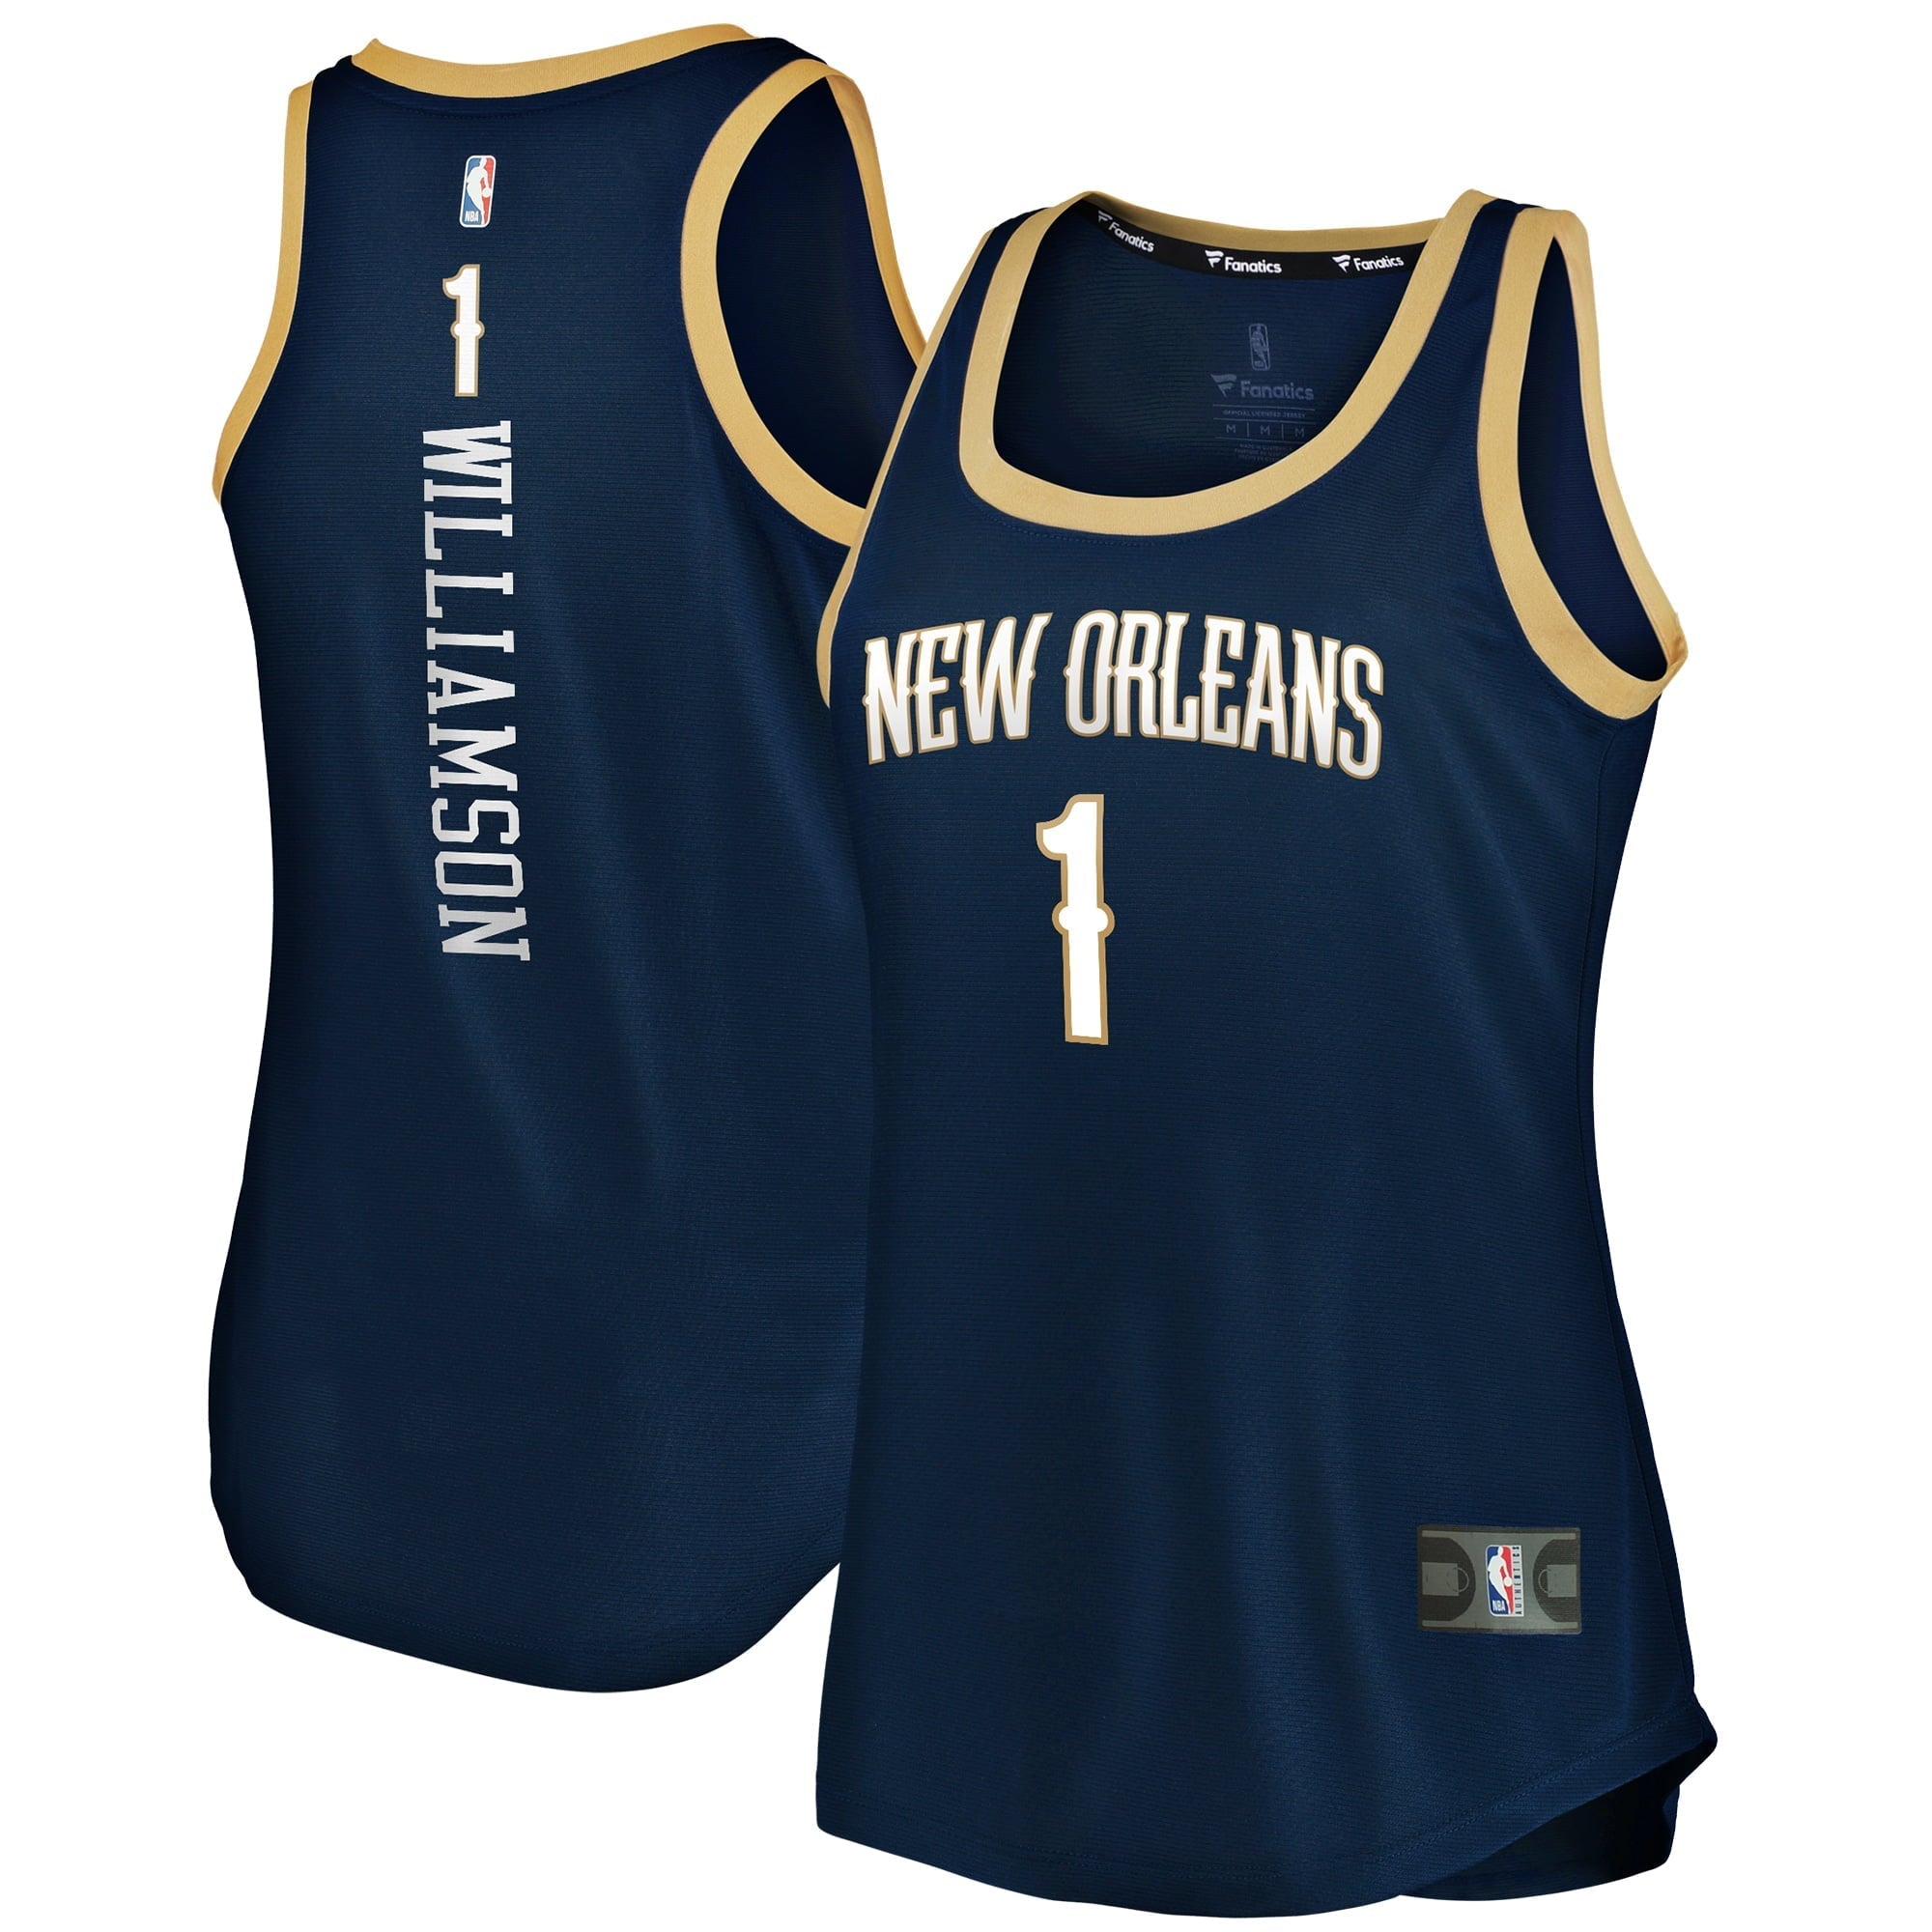 New Orleans Pelicans Basketball Jerseys - Team Store